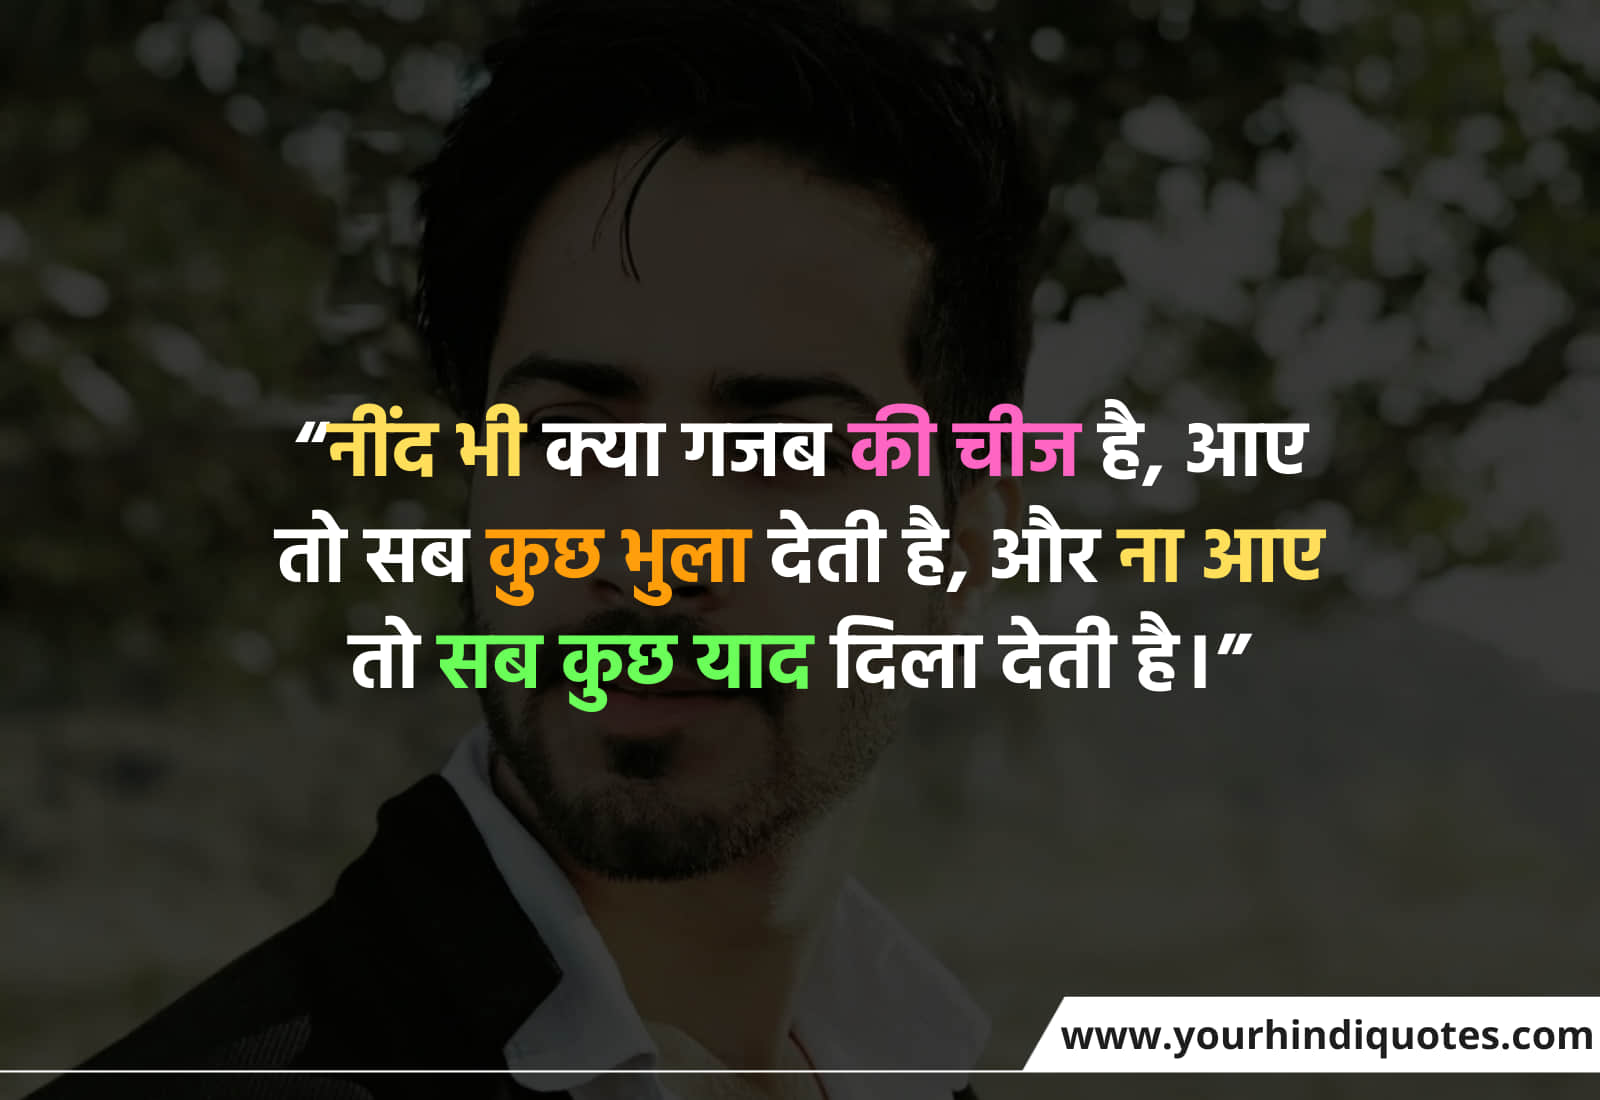 Good Night Quotes In Hindi